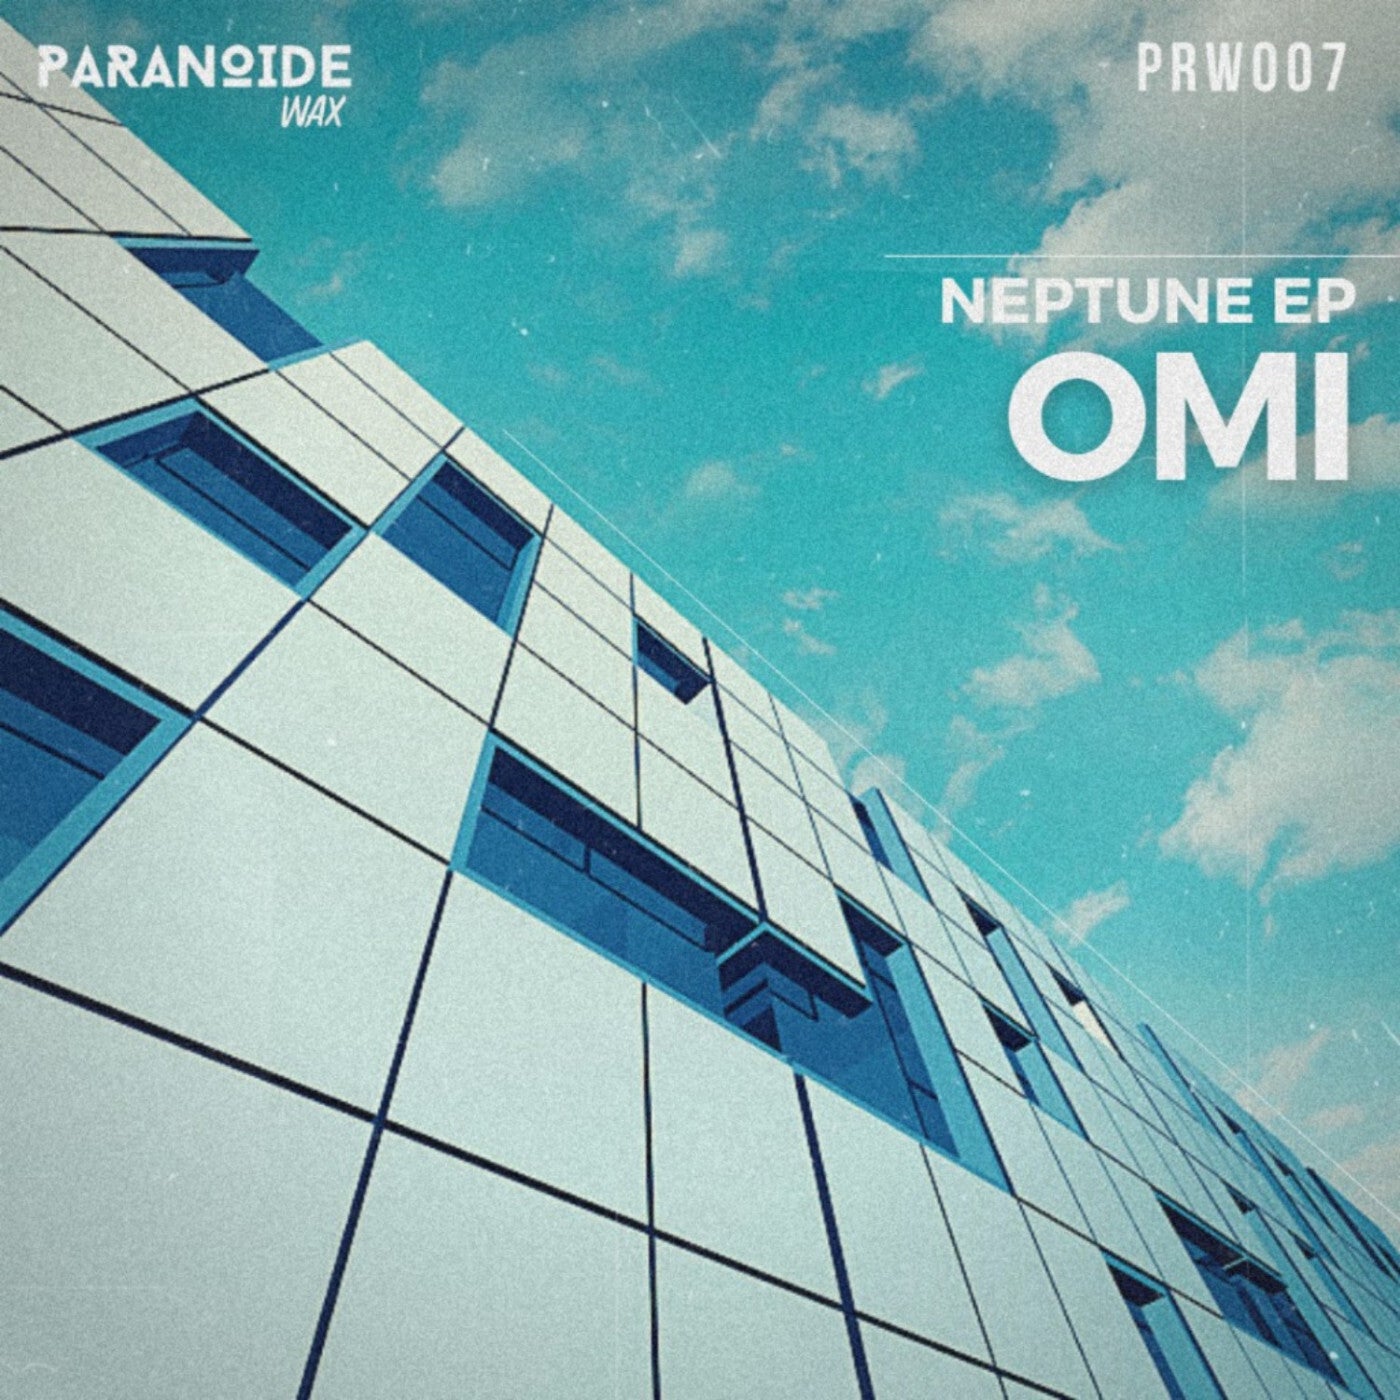 Omi – Neptune EP [PRW007]